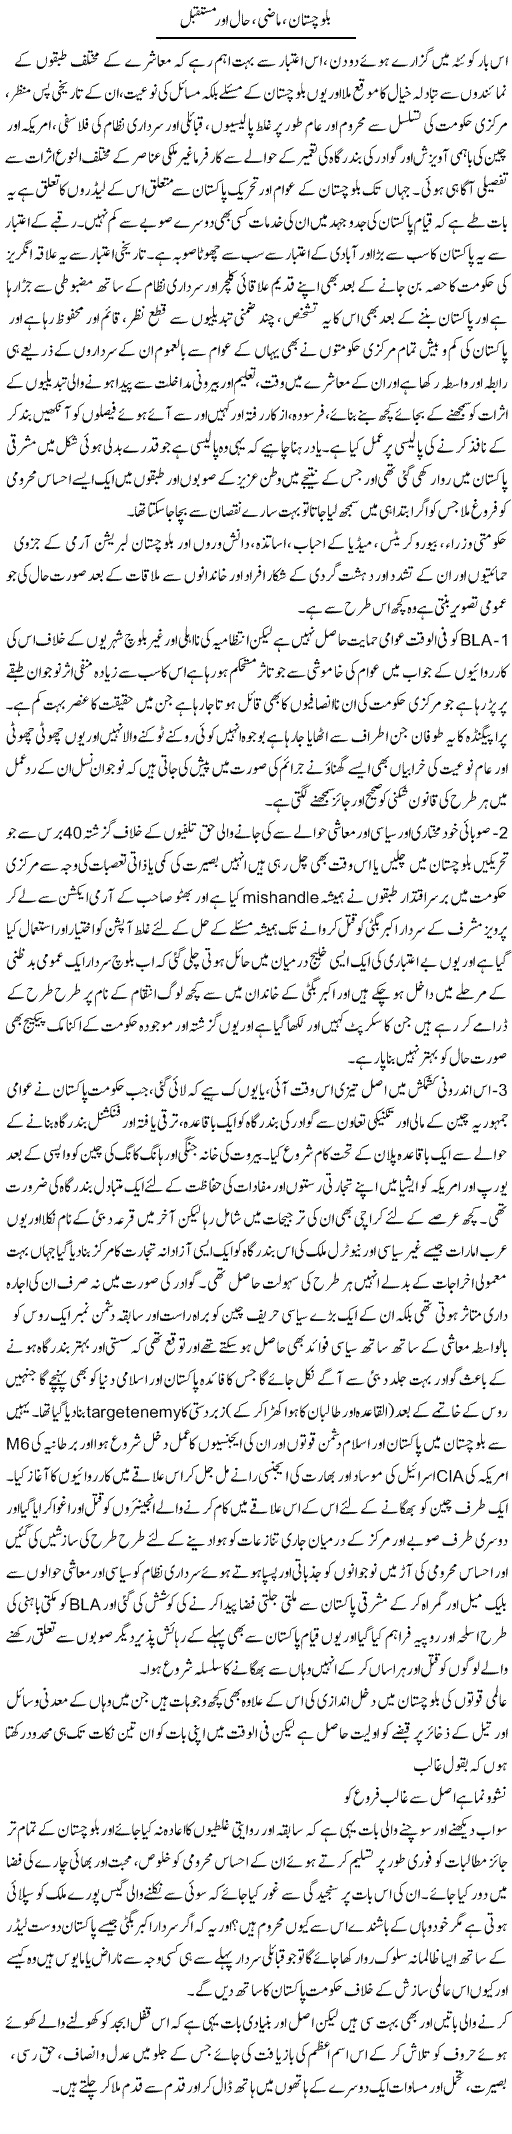 Balochistan Express Column Amjad Islam 4 July 2010